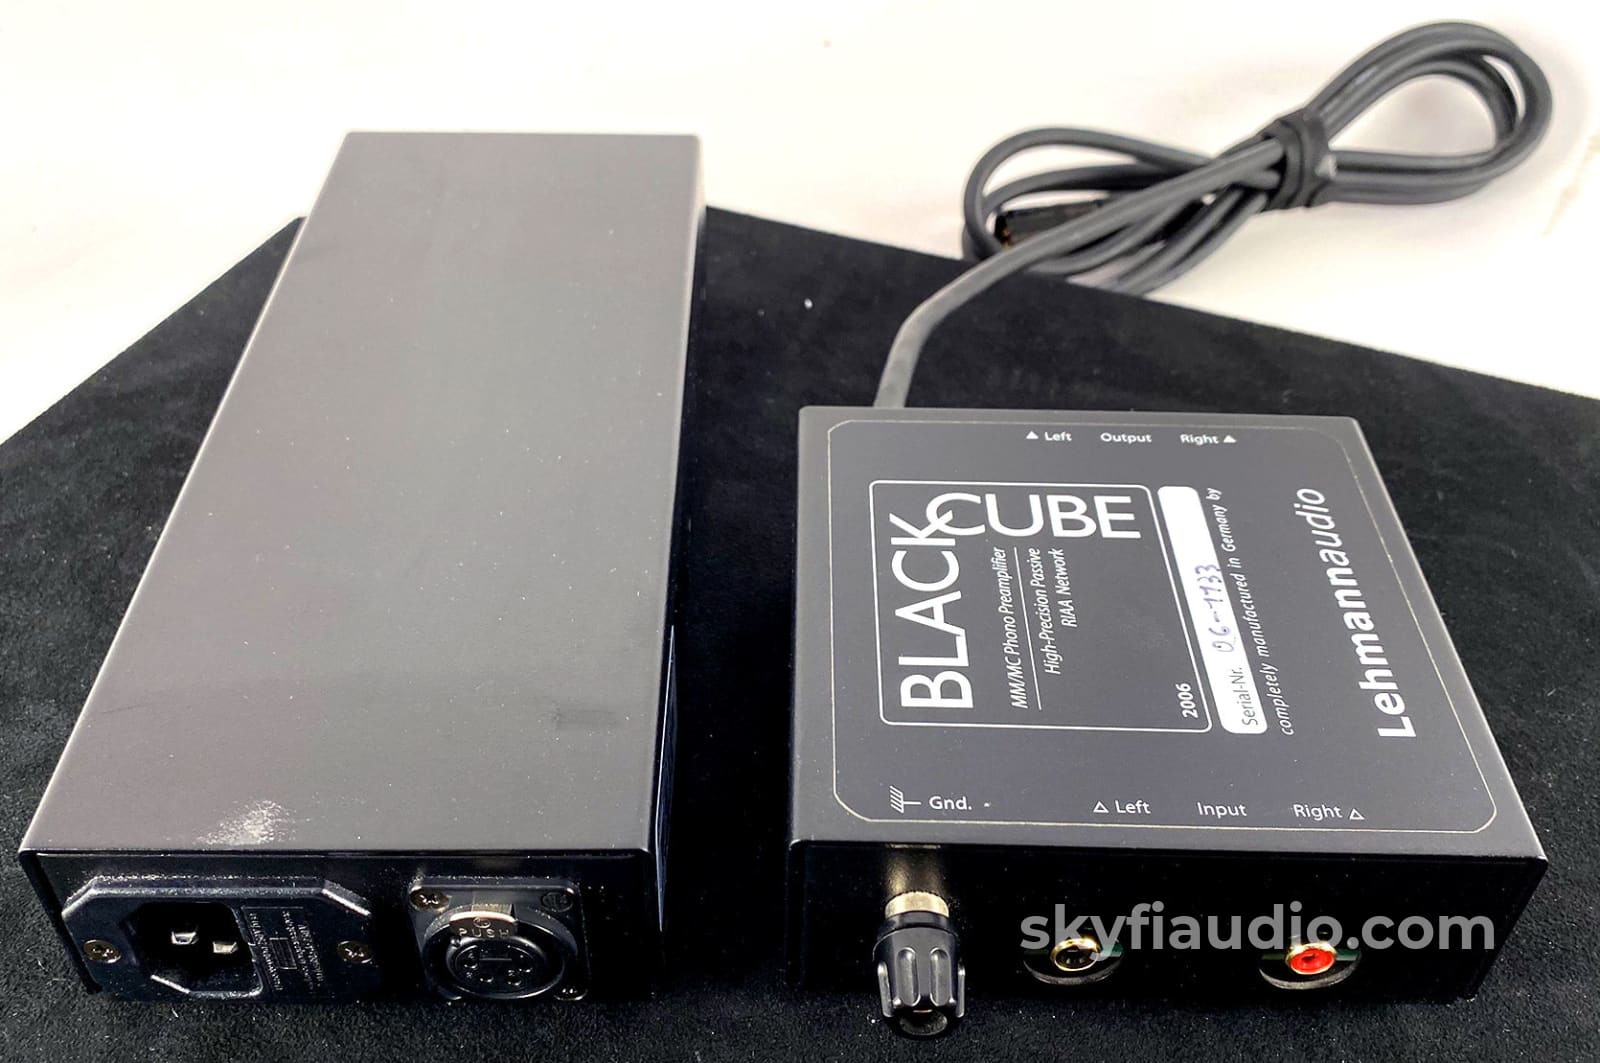 Lehmann Audio Black Cube Se Phono Preamplifier W/Pwx Upgraded Power Supply